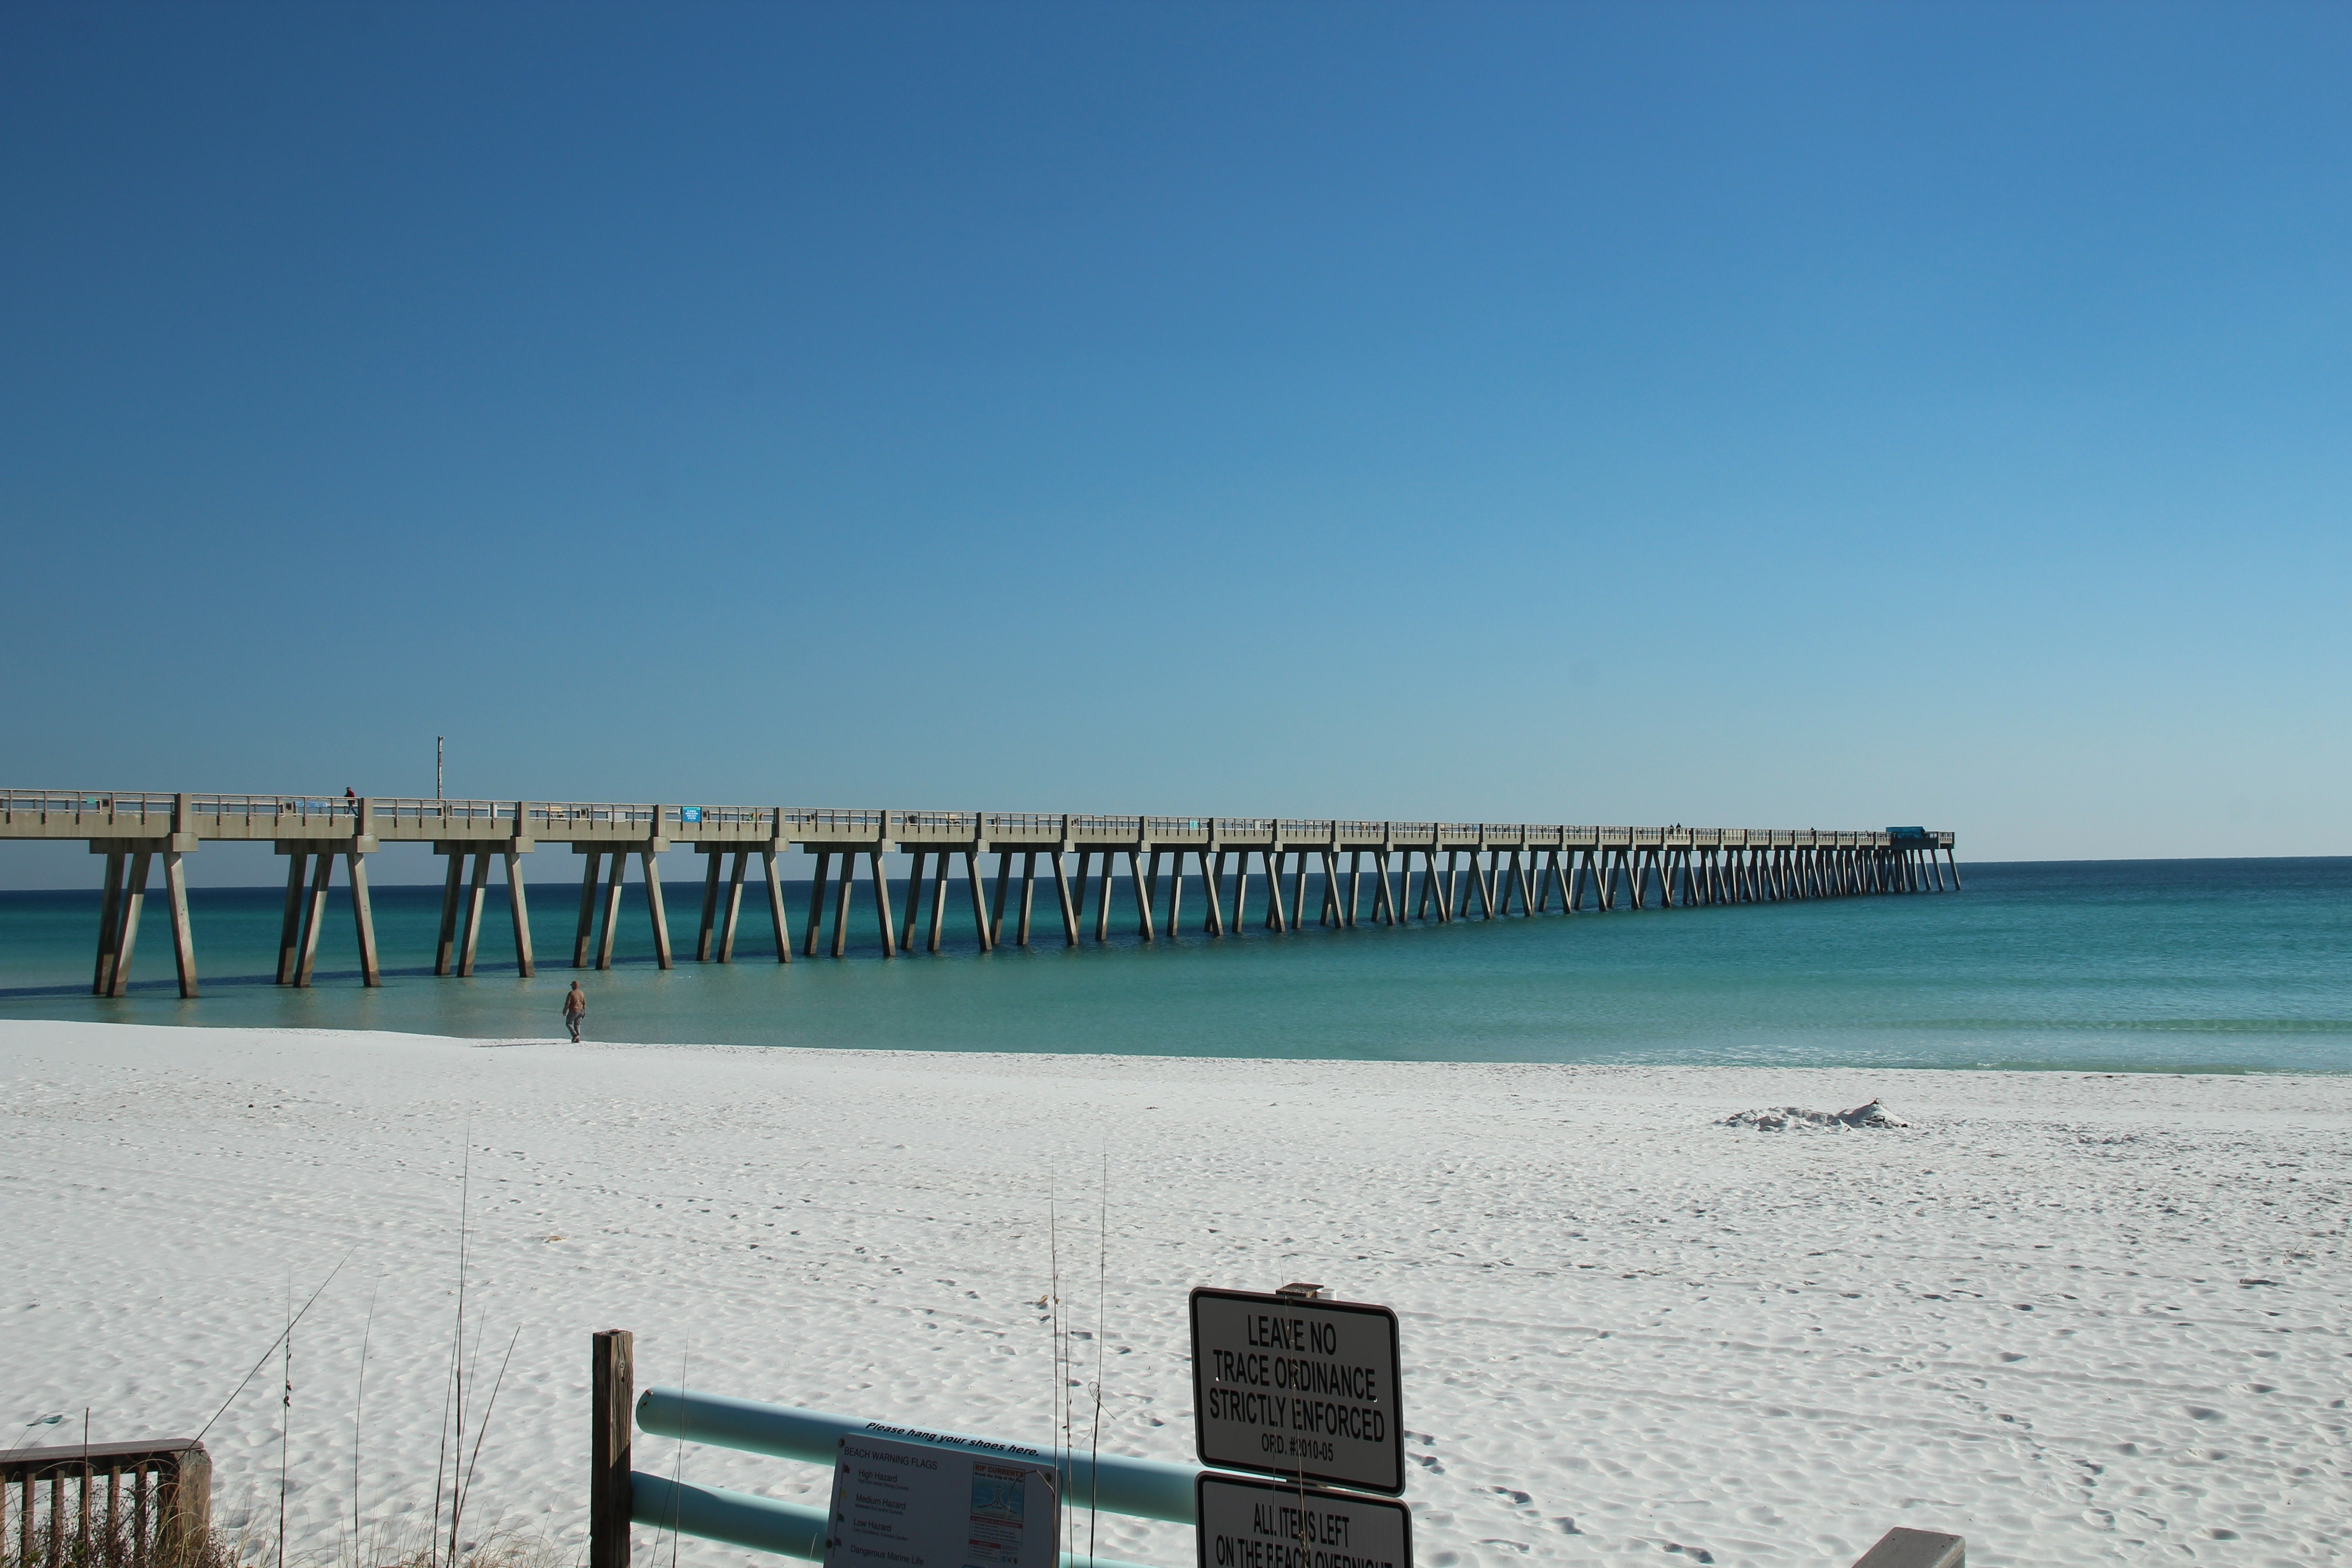 Longest pier in Florida